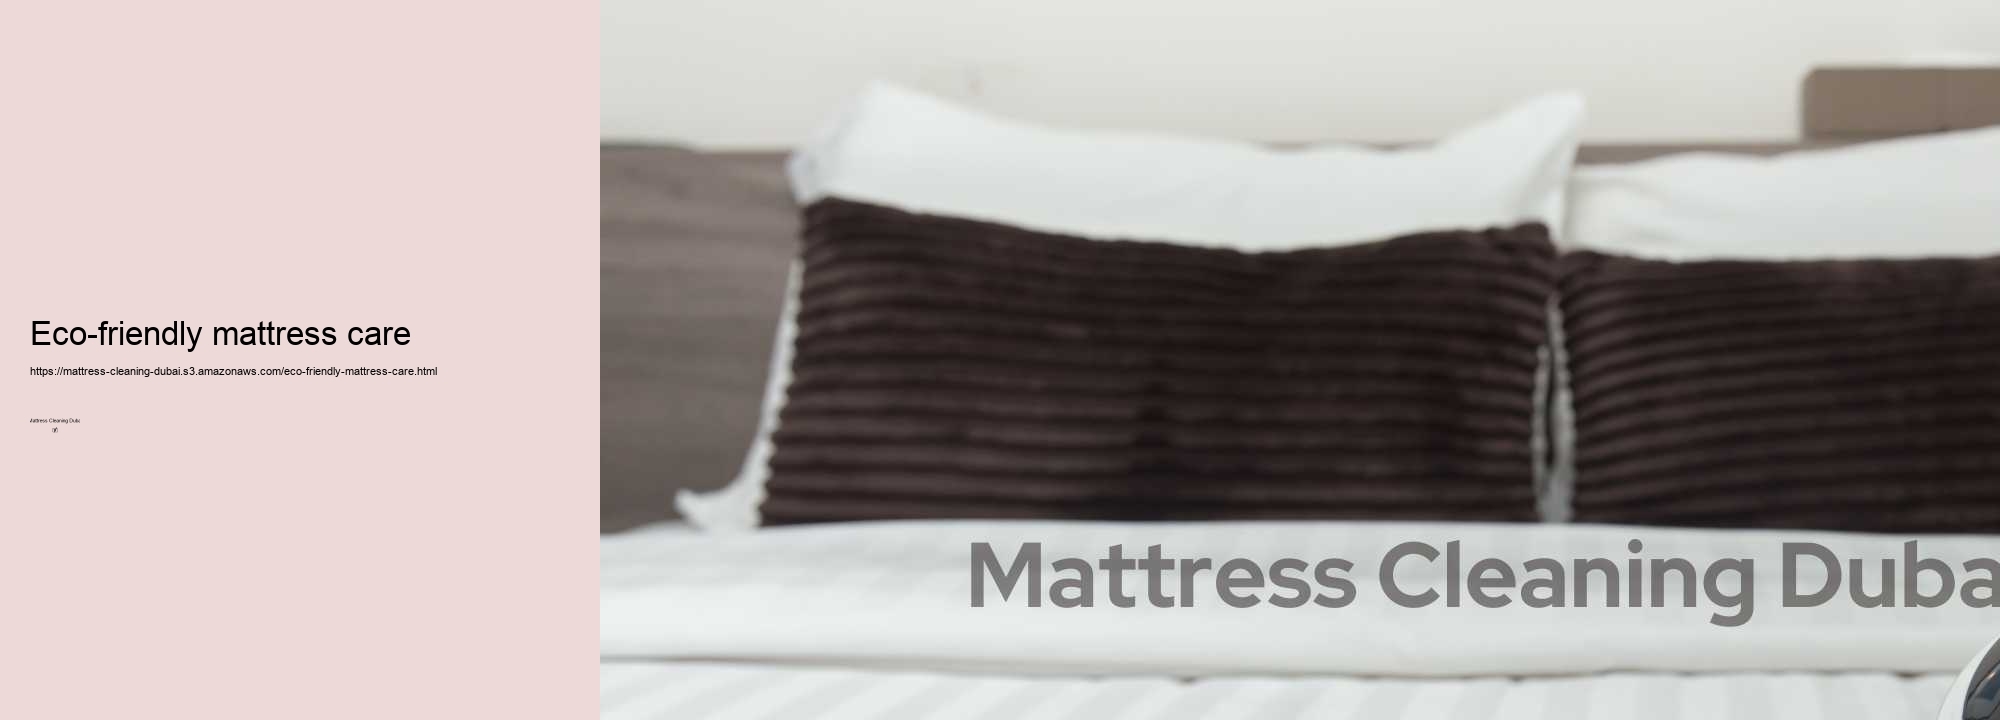 Eco-friendly mattress care